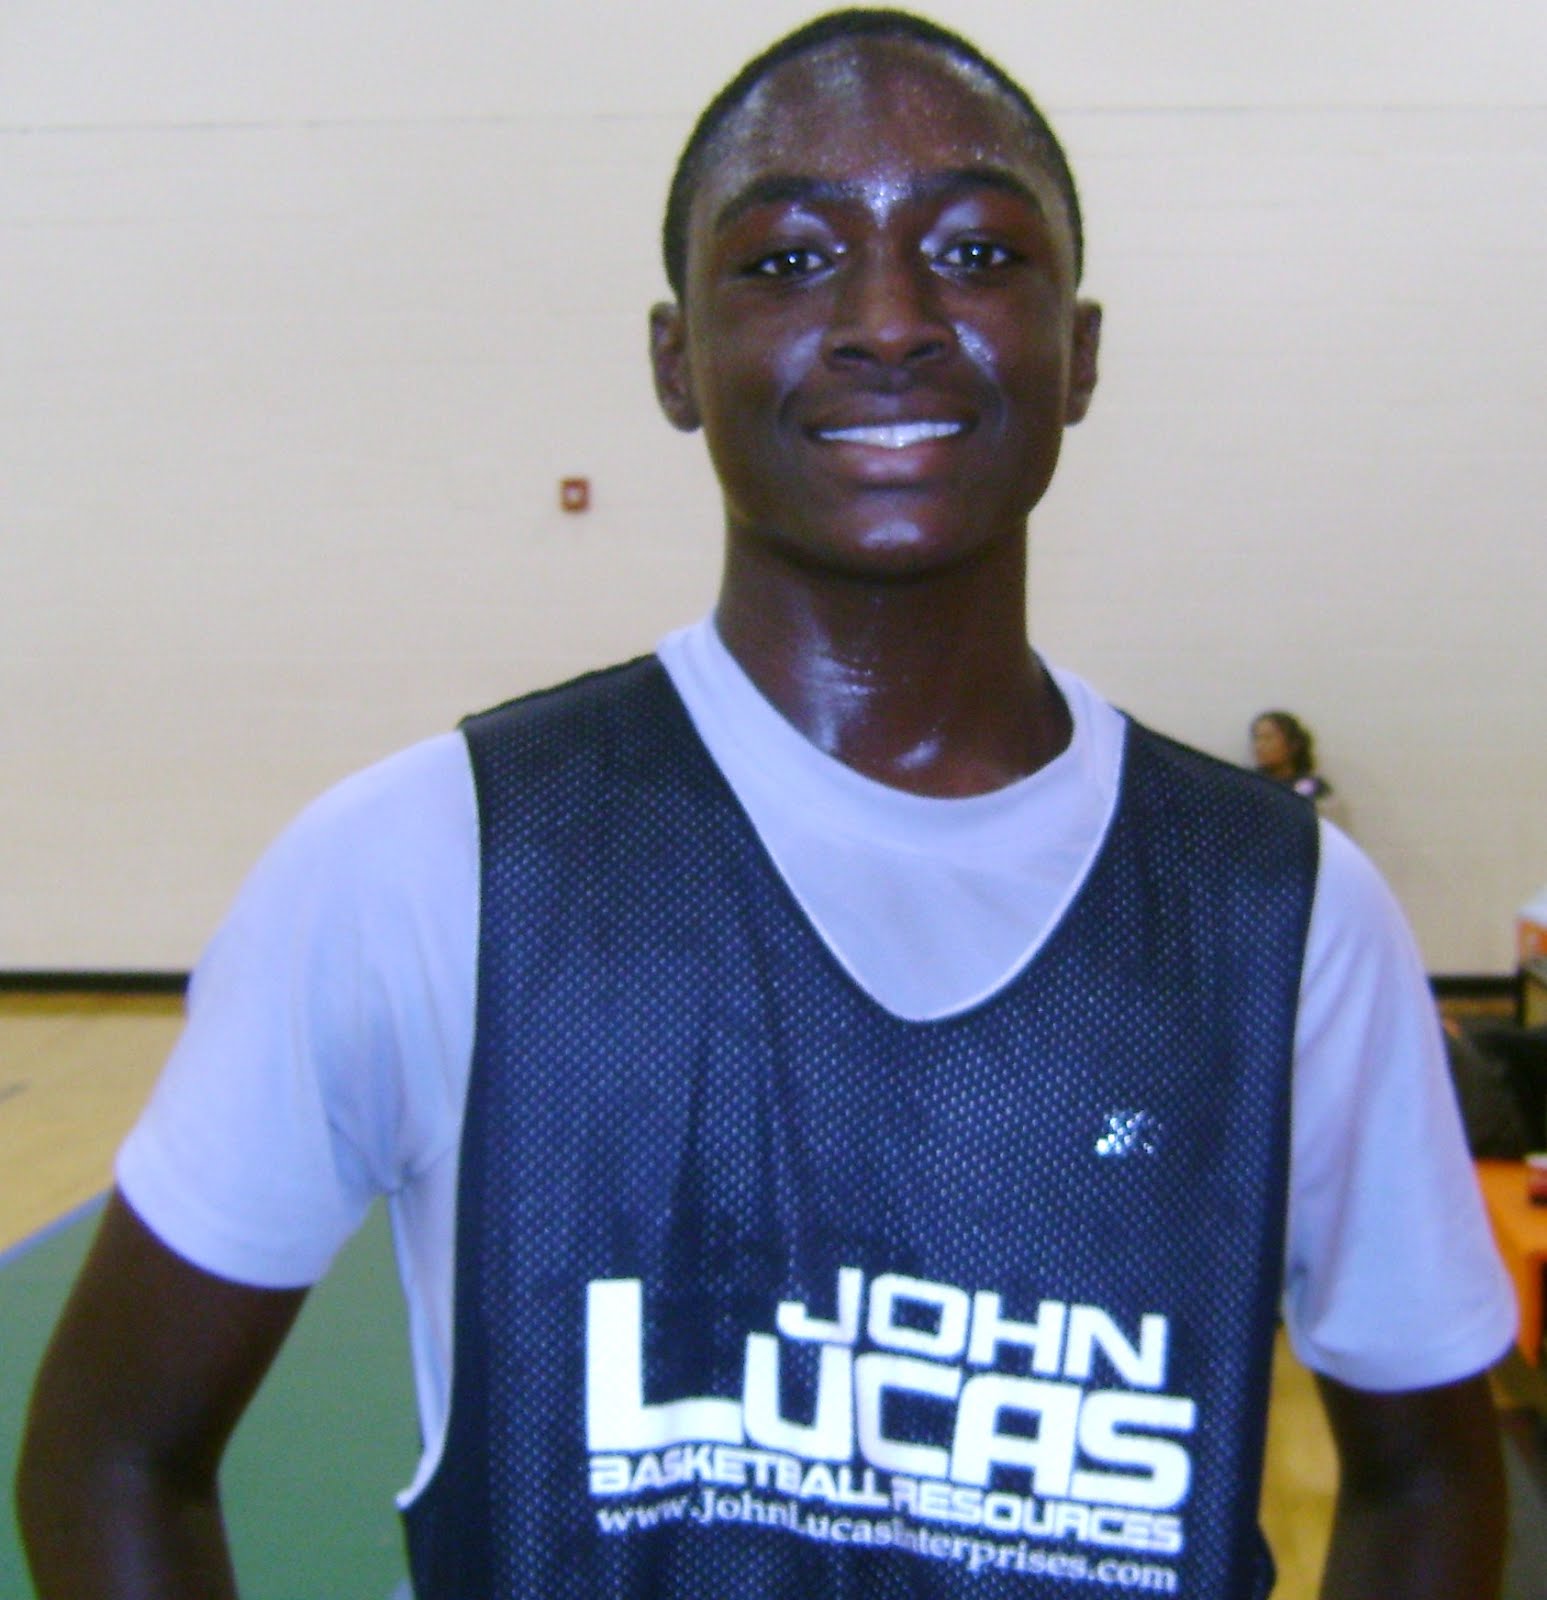 John Lucas Basketball